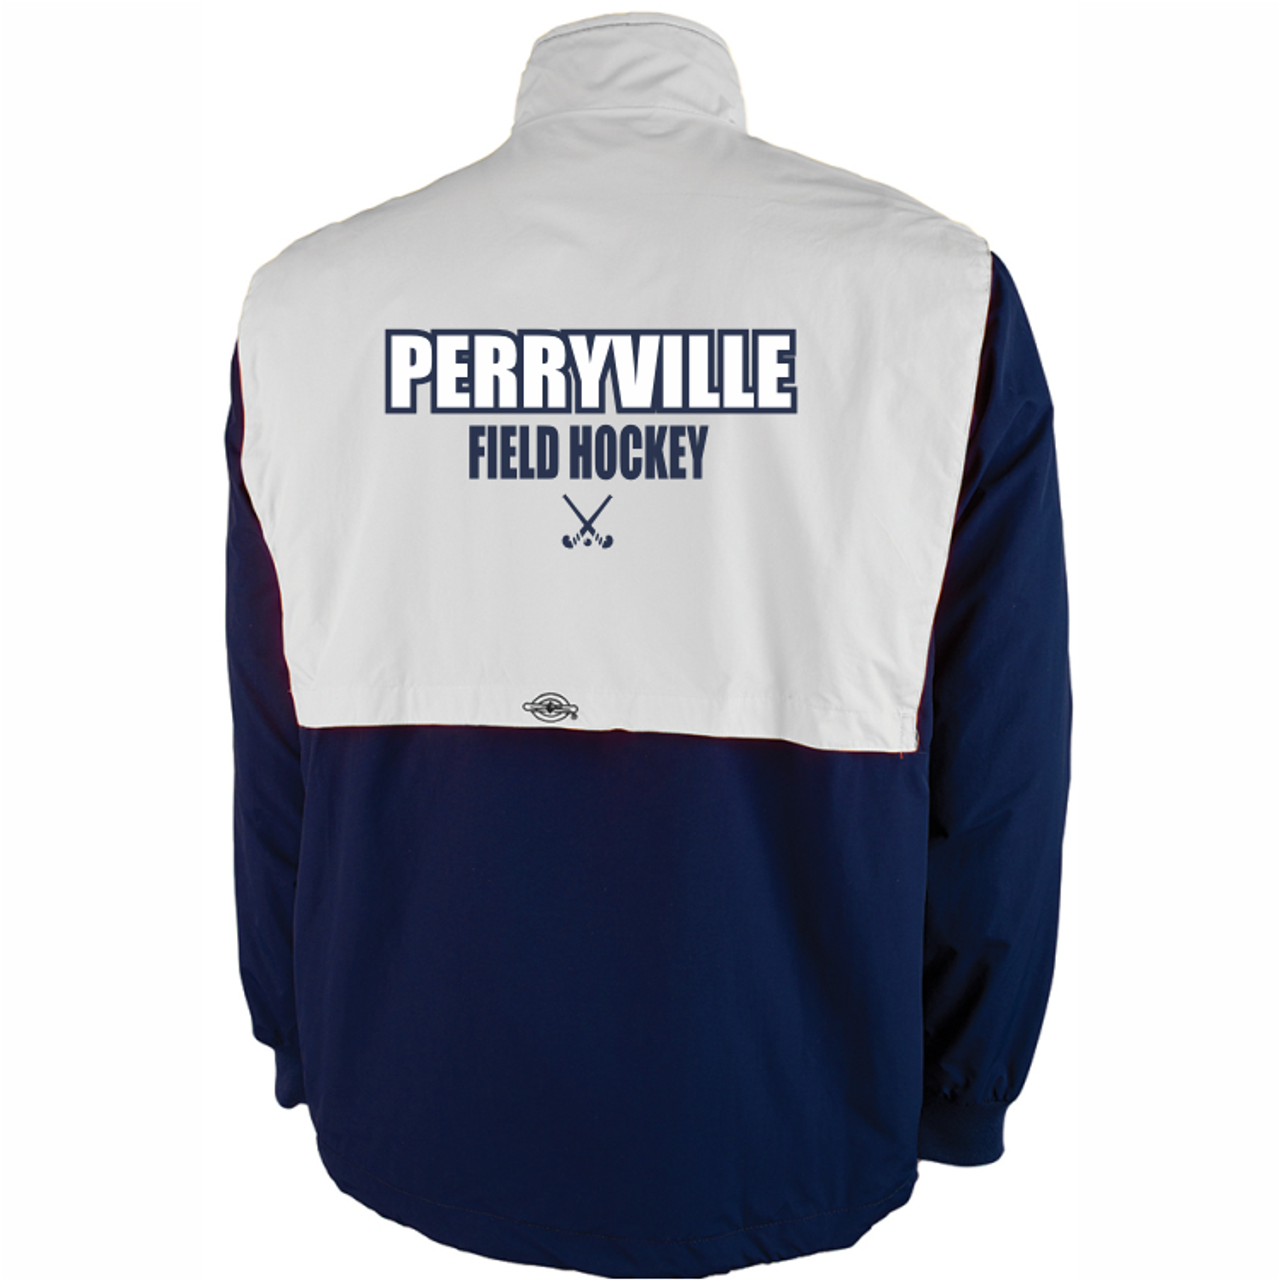 Perryville Field Hockey Team Jacket